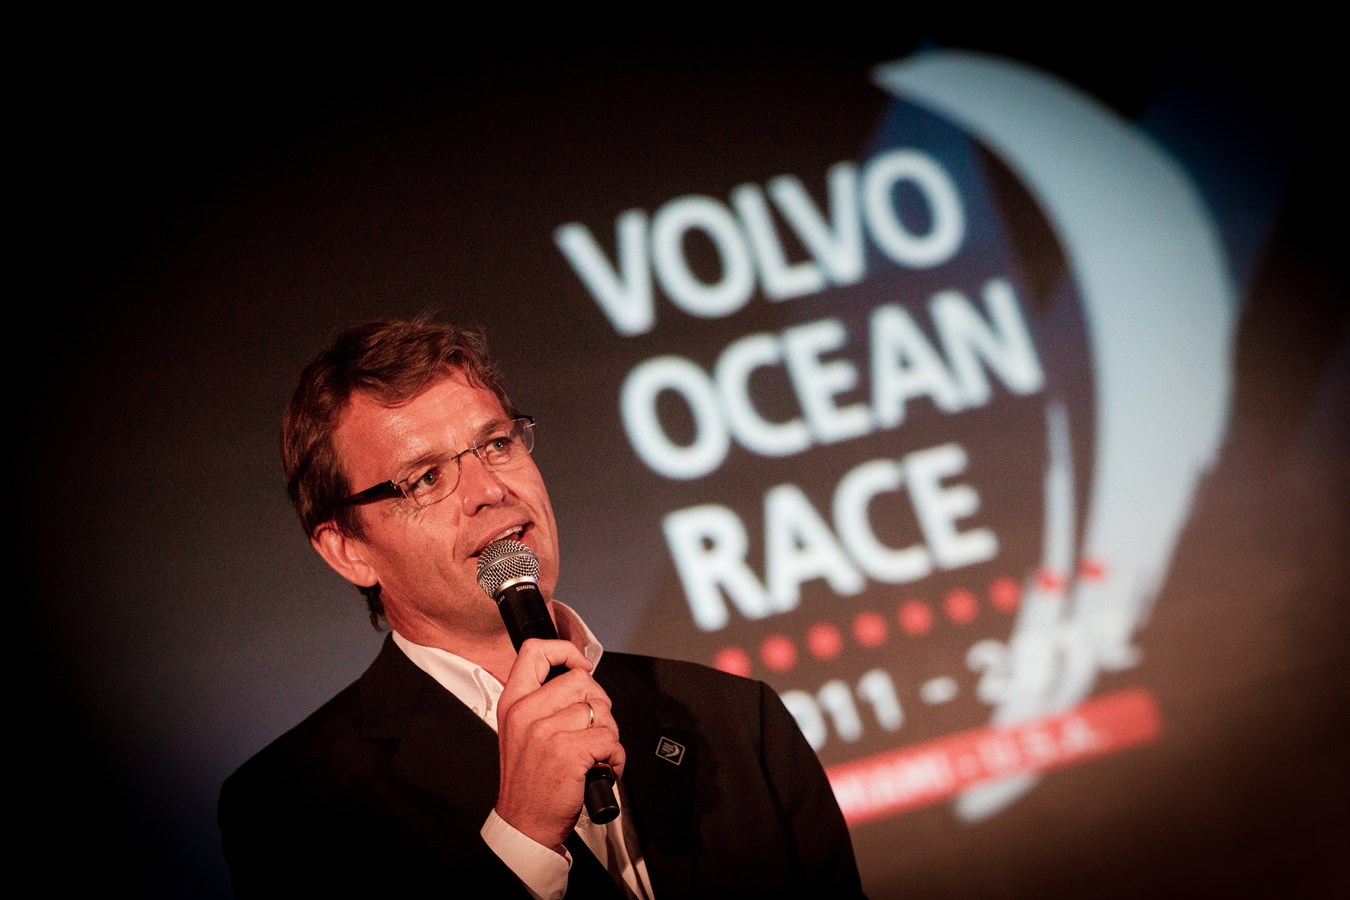 Volvo Ocean Race 2014-15 / Knut Frostad, CEO de la Volvo Ocean Race 